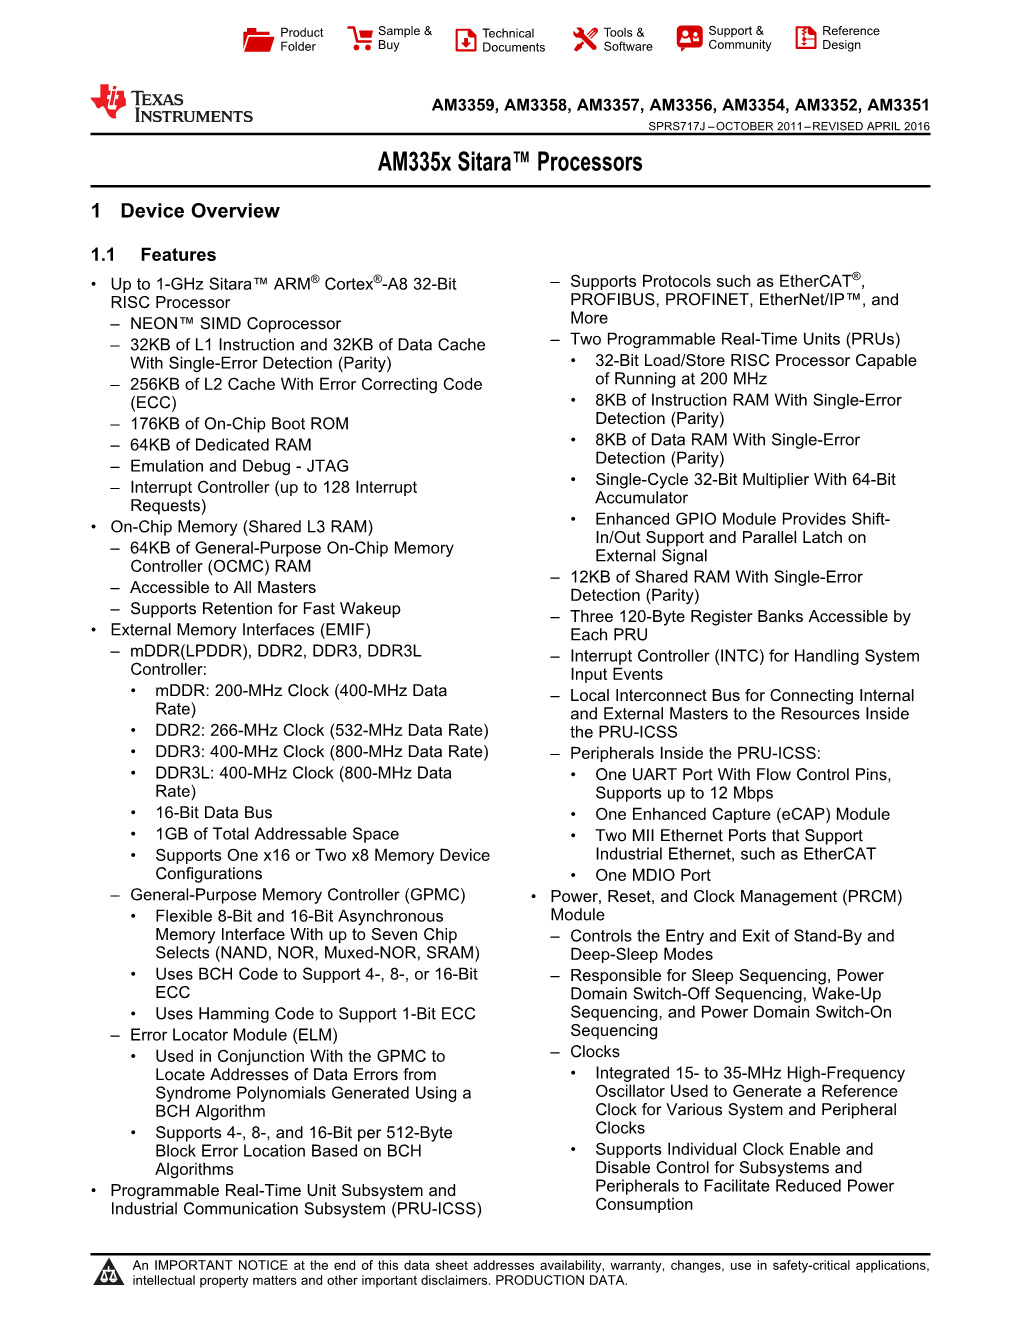 Am335x Sitara Processors Datasheet (Rev. J)